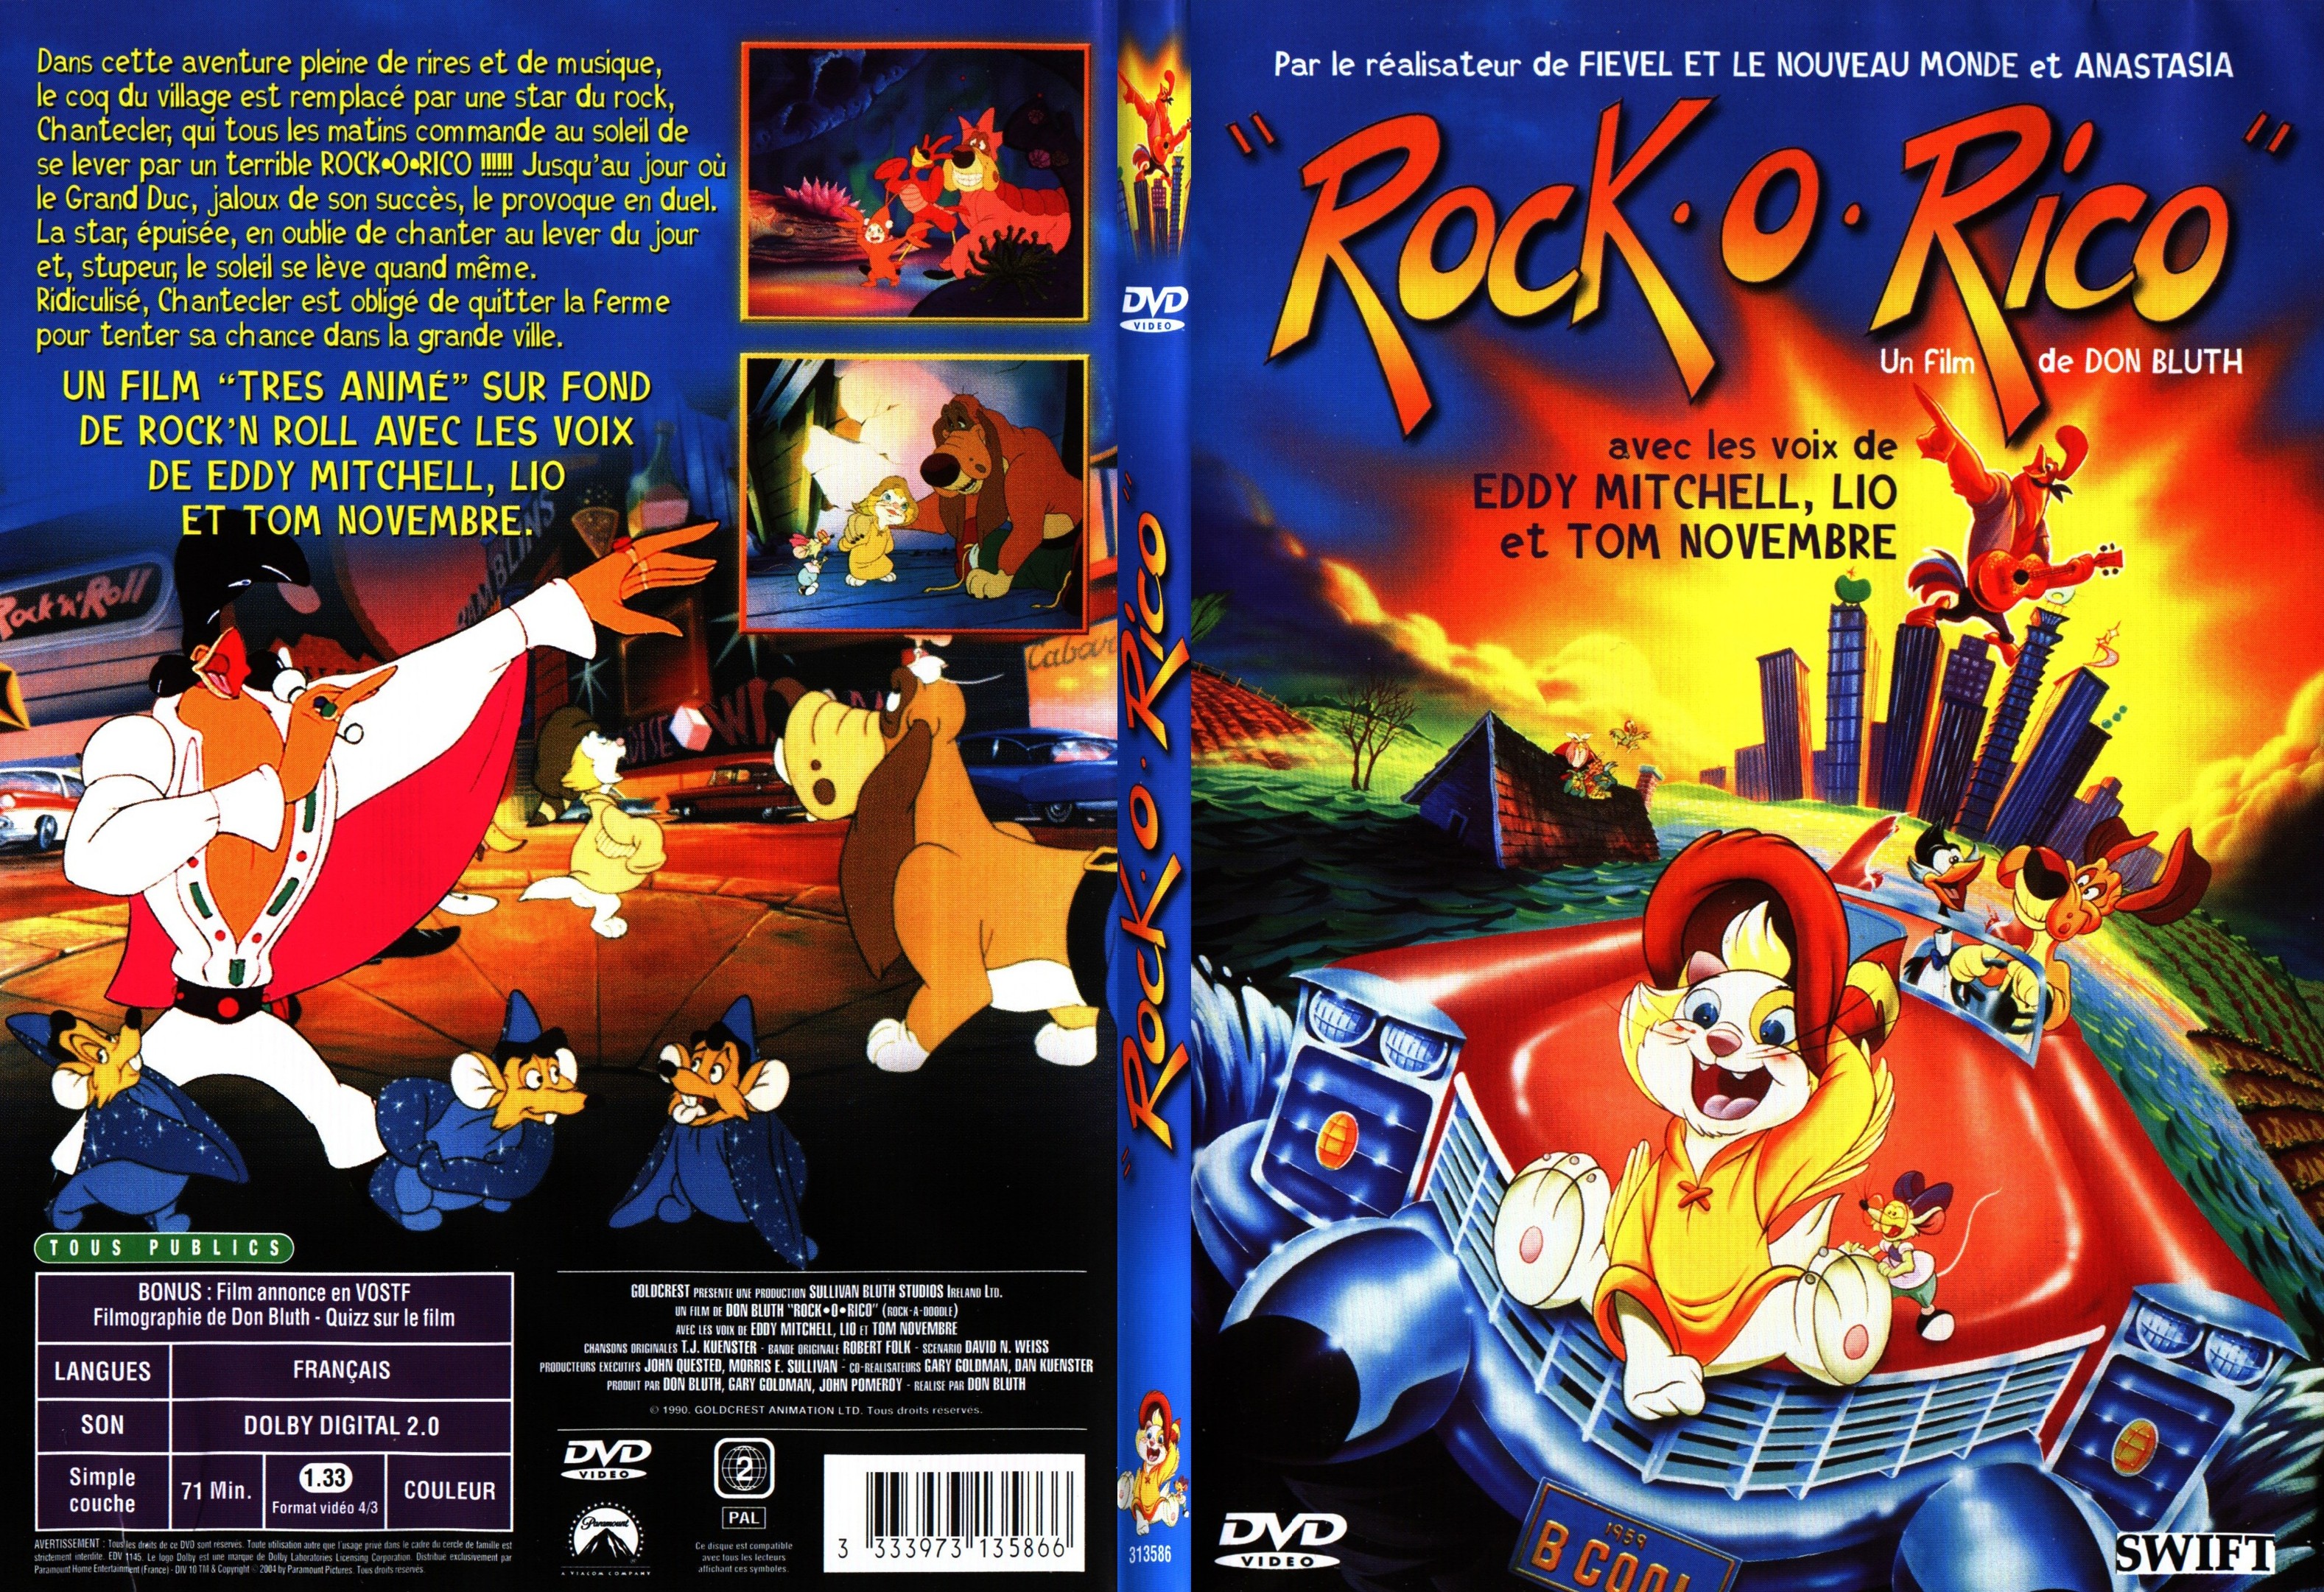 Jaquette DVD Rock O Ricko - SLIM